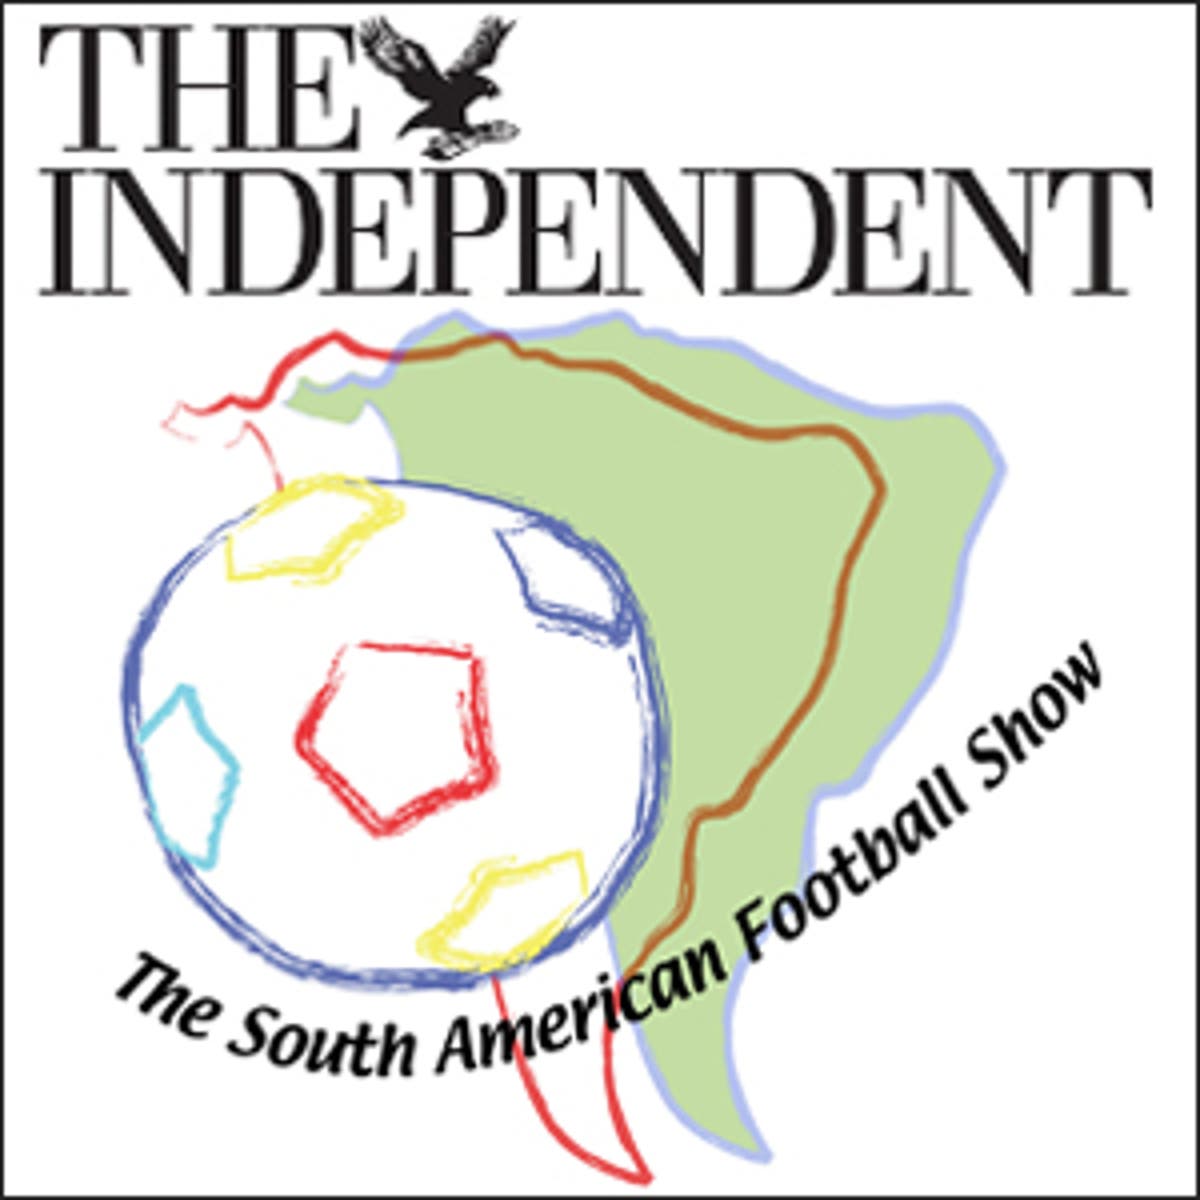 Football insights with Roque Santa Cruz - Sports Insight